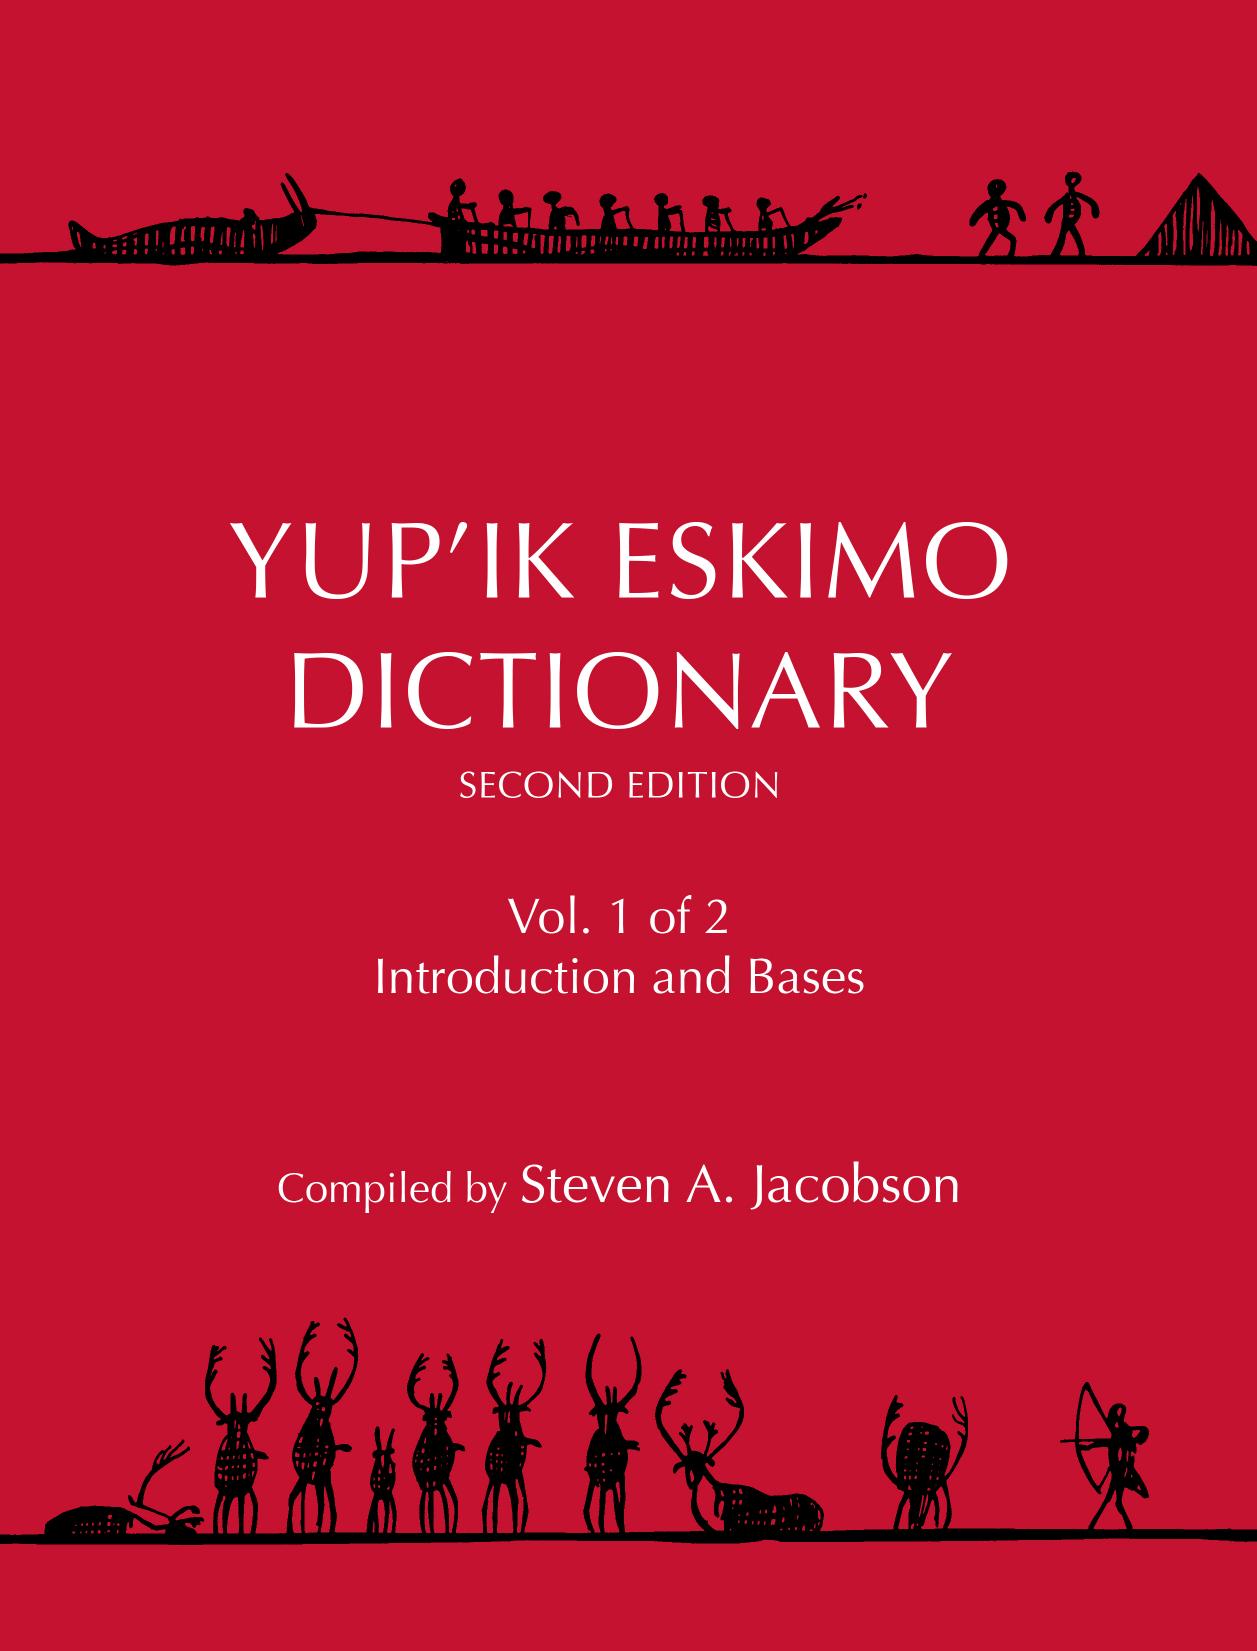 Yup’ik Eskimo dictionary